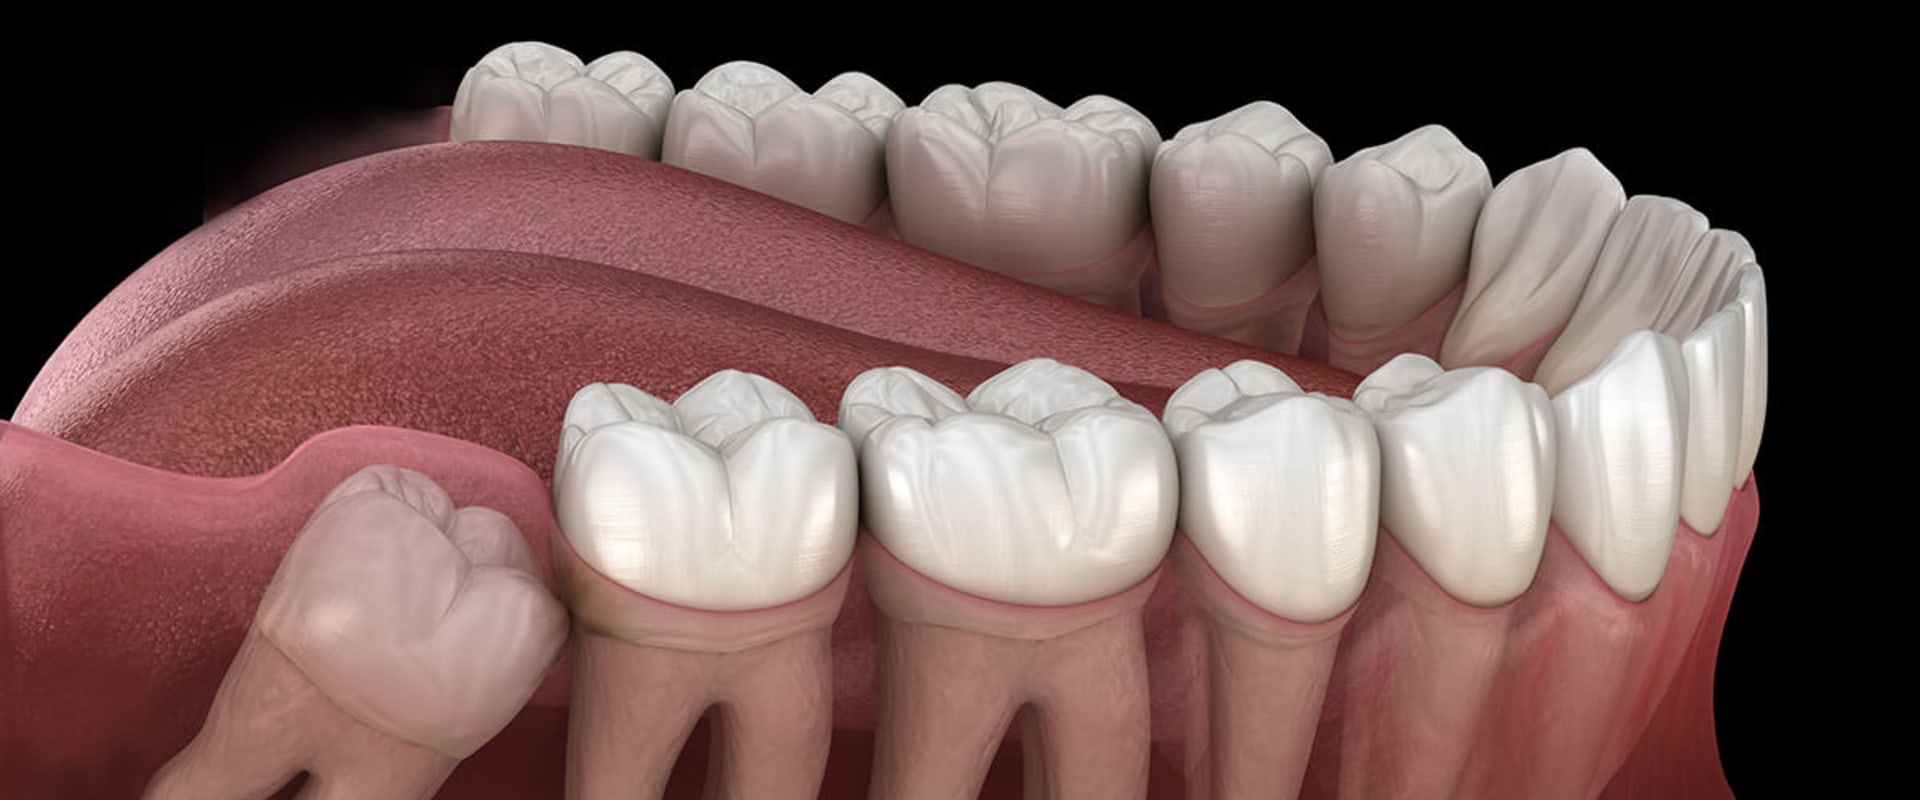 Do I Need an Oral Surgeon to Remove My Wisdom Teeth?